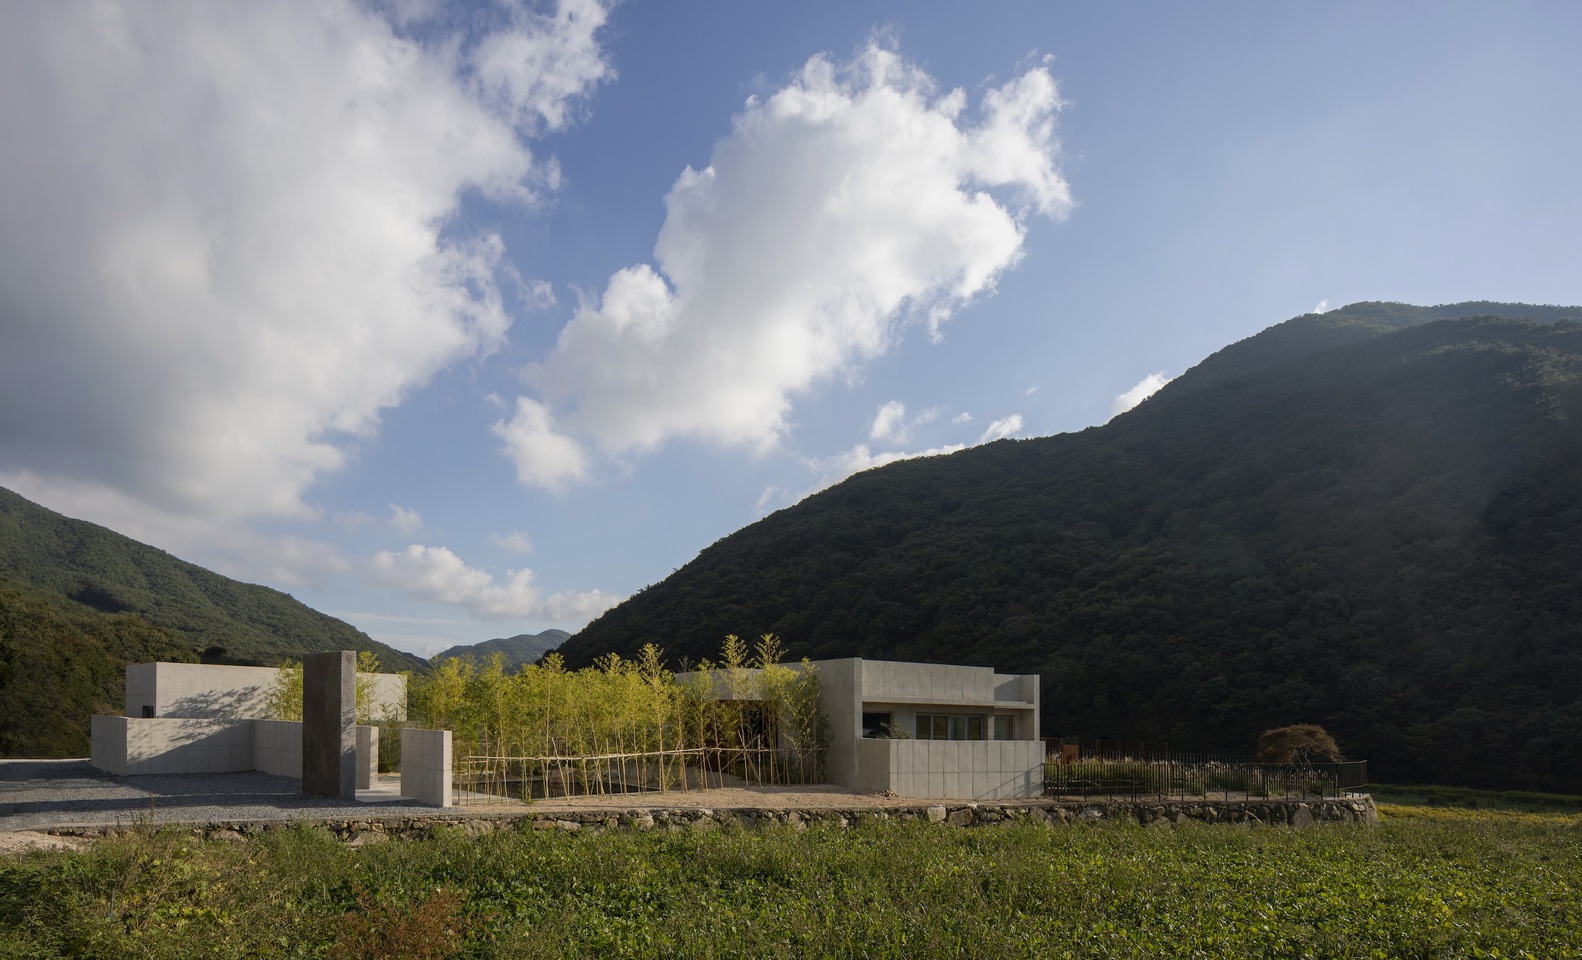 Gyeongjuok House: Balancing Home, Landscape, and Privacy